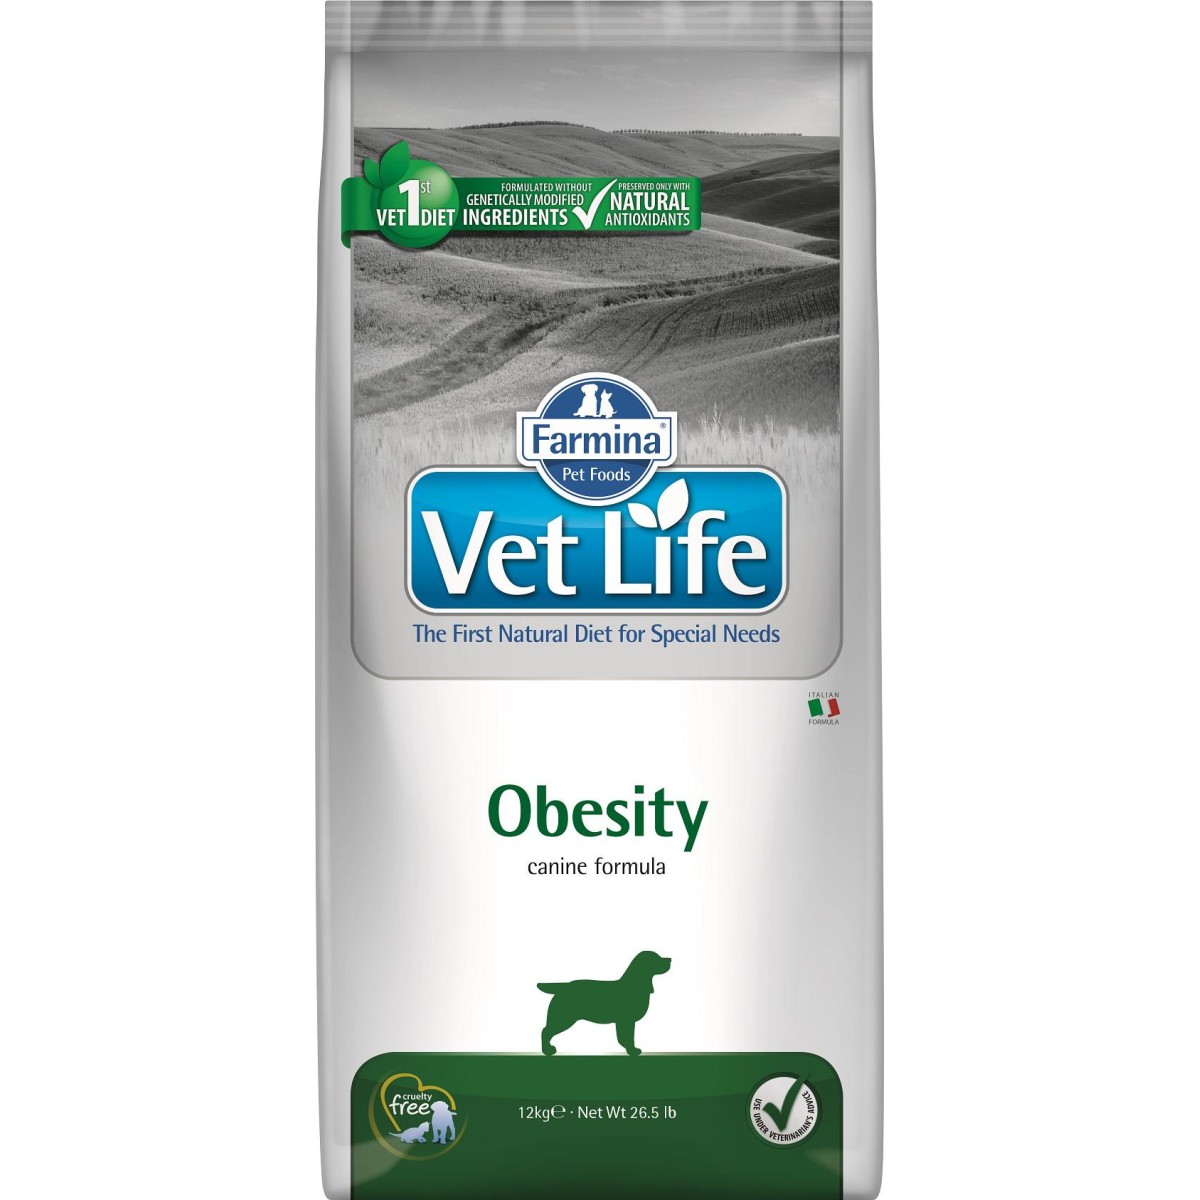 Obesity корм для собак. Farmina vet Life Dog Diabetic. Фармина obesity для собак. Farmina vet Life Dog obesity сухой корм для взрослых собак с ожирением - 12 кг. Корм для собак Farmina vet Life при сахарном диабете 12 кг.